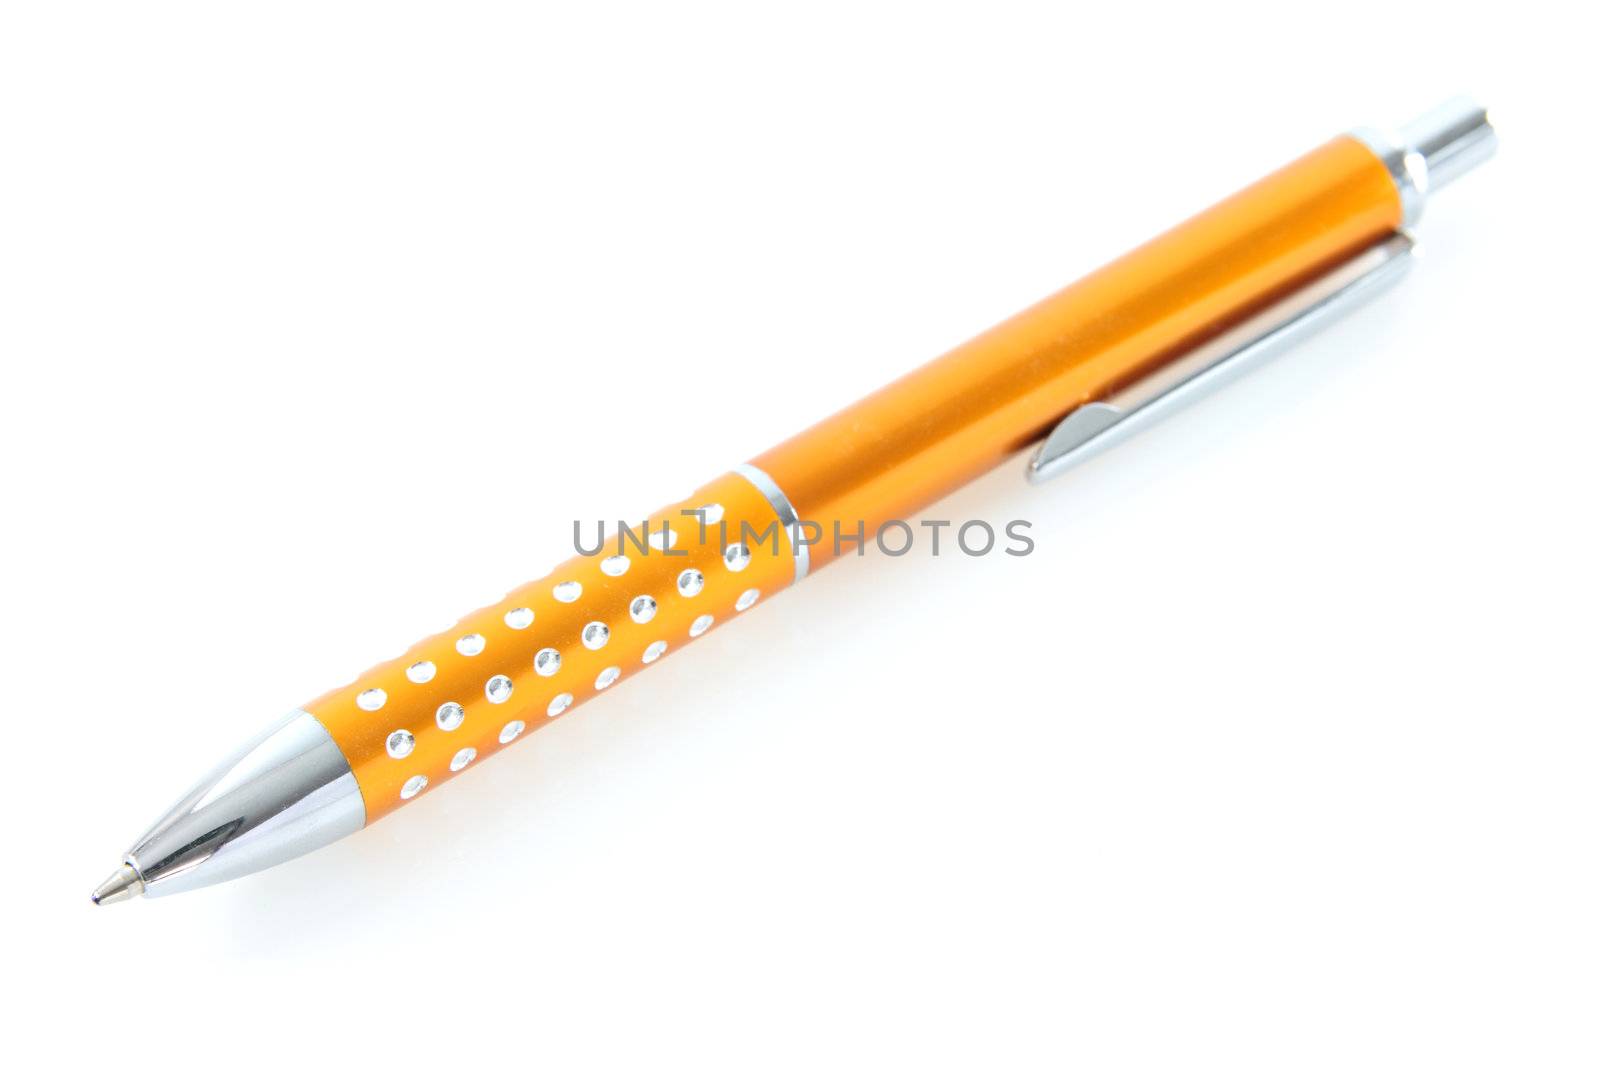 Metalic pen isolated on white background